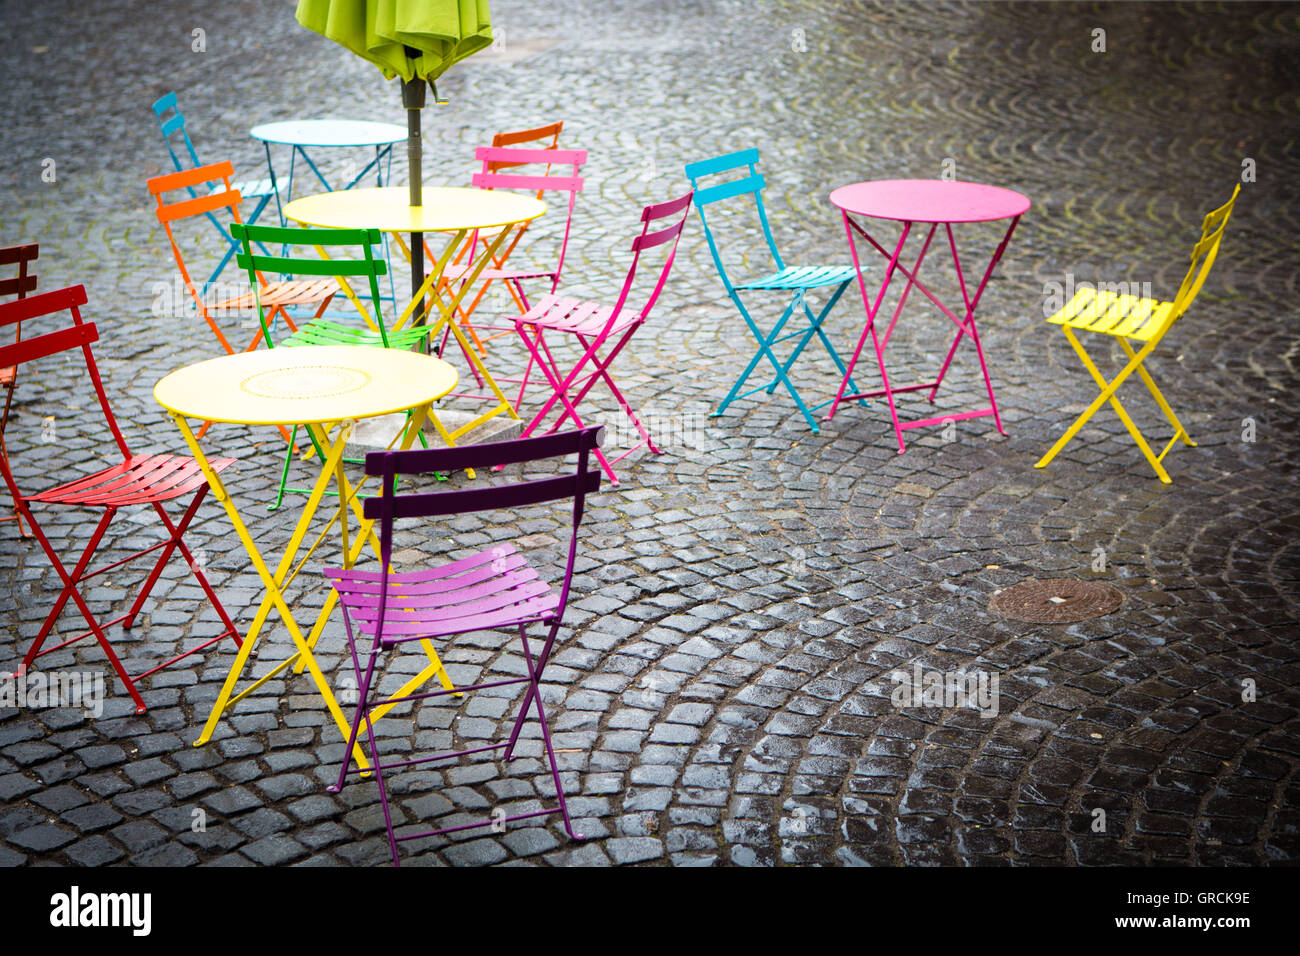 Sidewalk Cafe, Colorful Seats Stock Photo